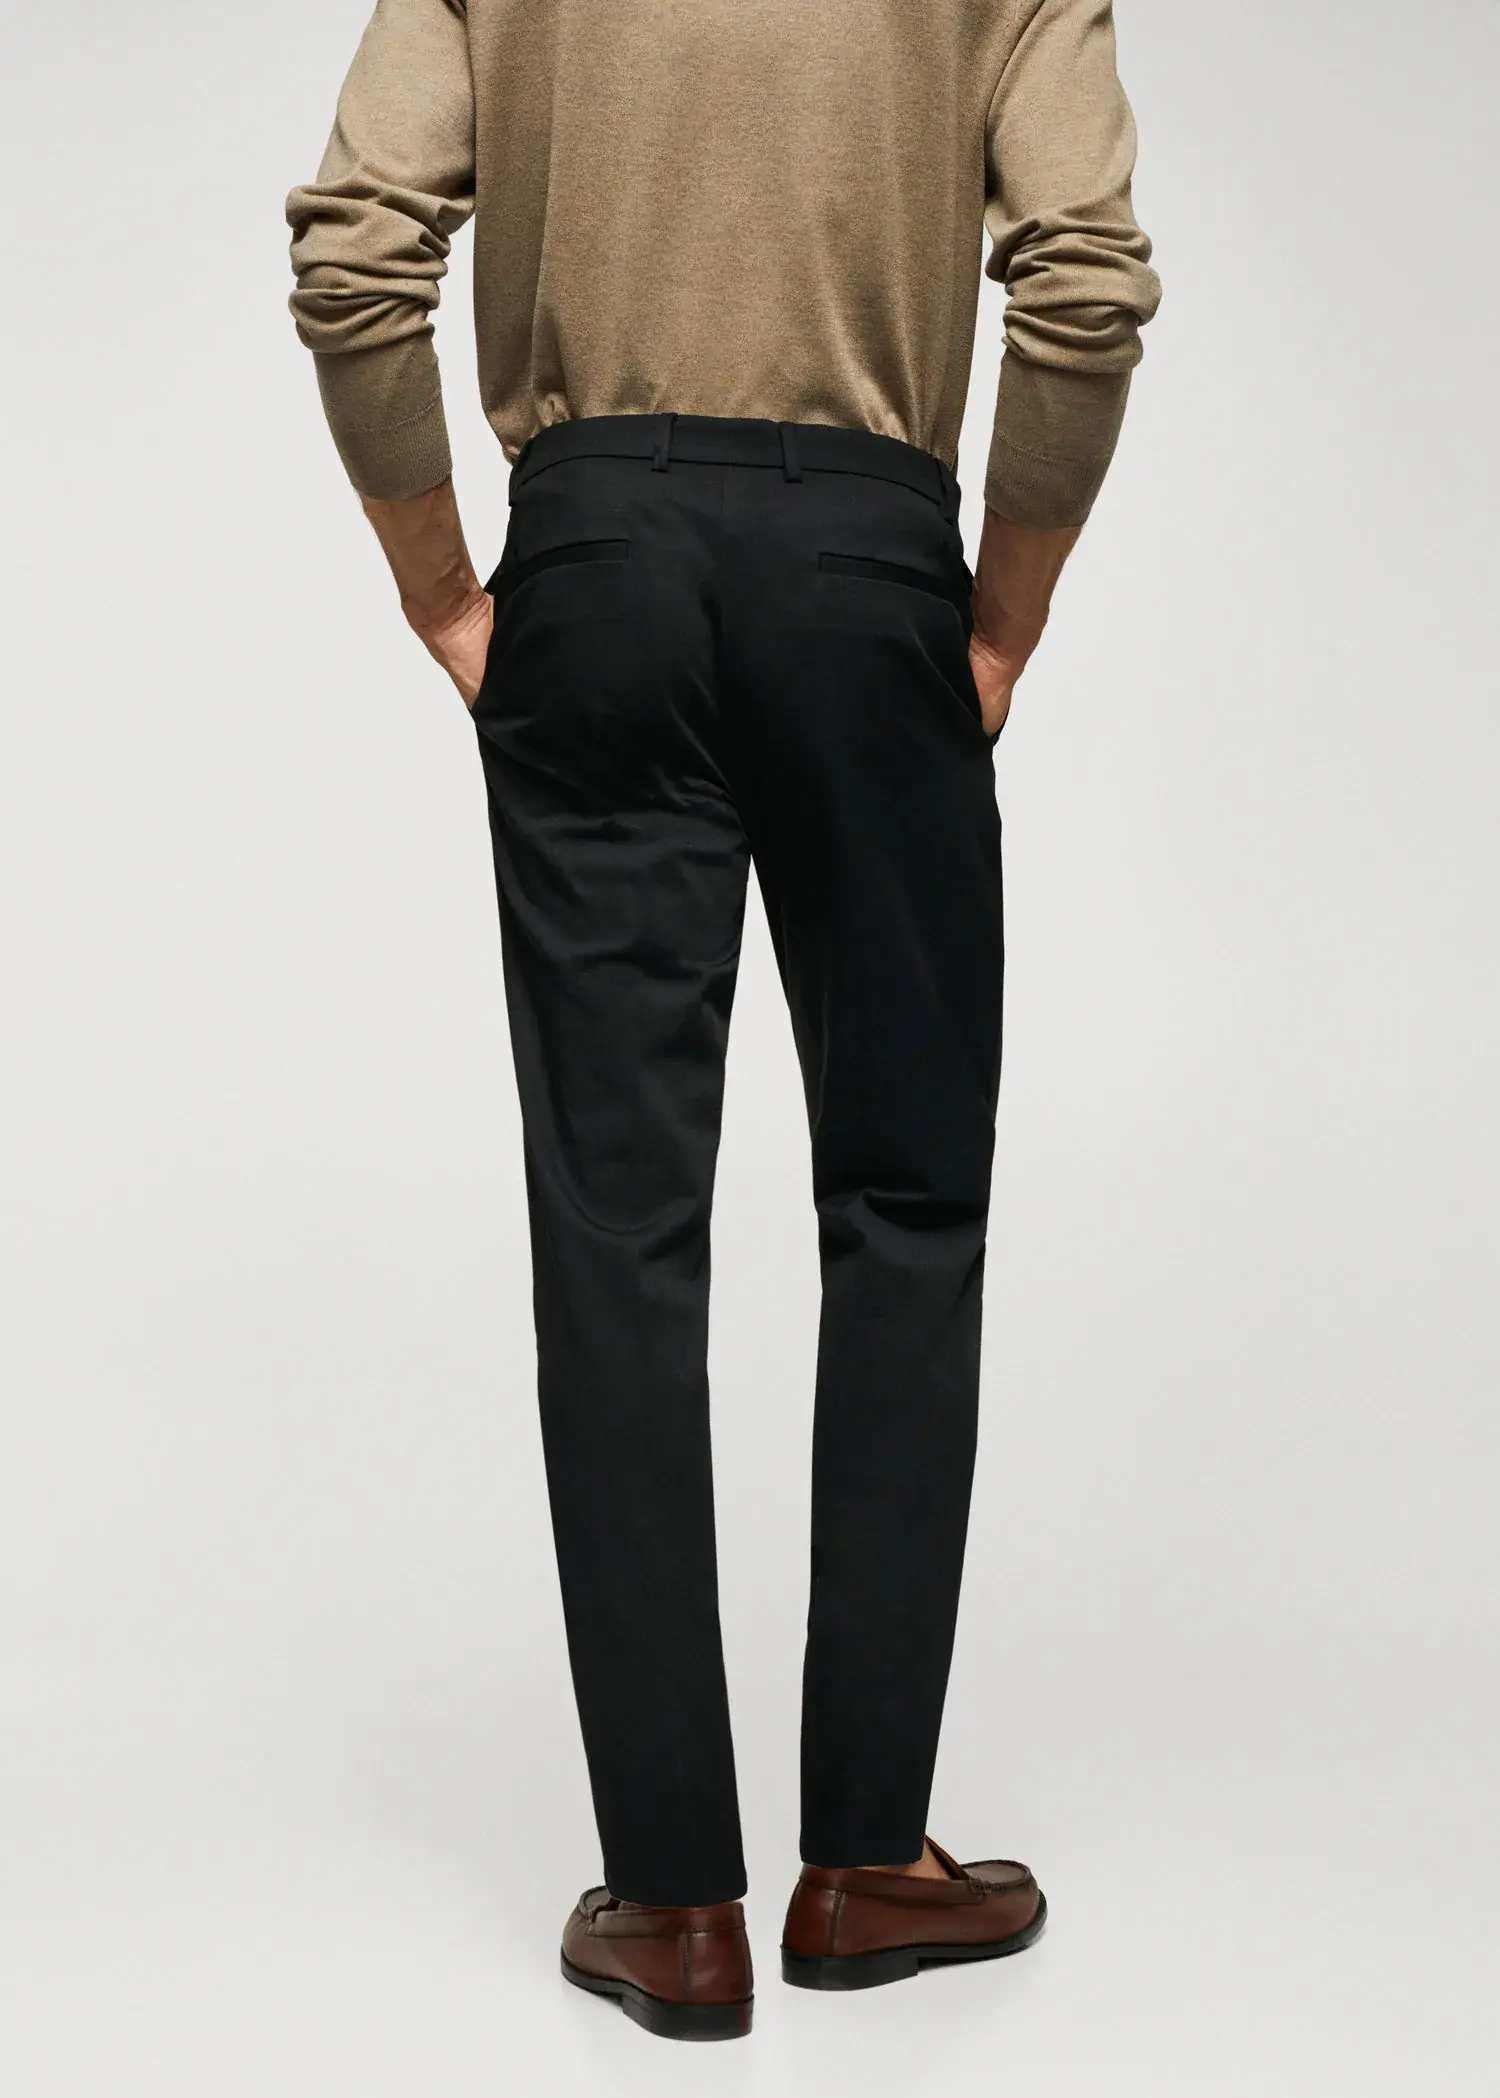 Mango Slim fit chino trousers. a man wearing black pants and a tan shirt. 